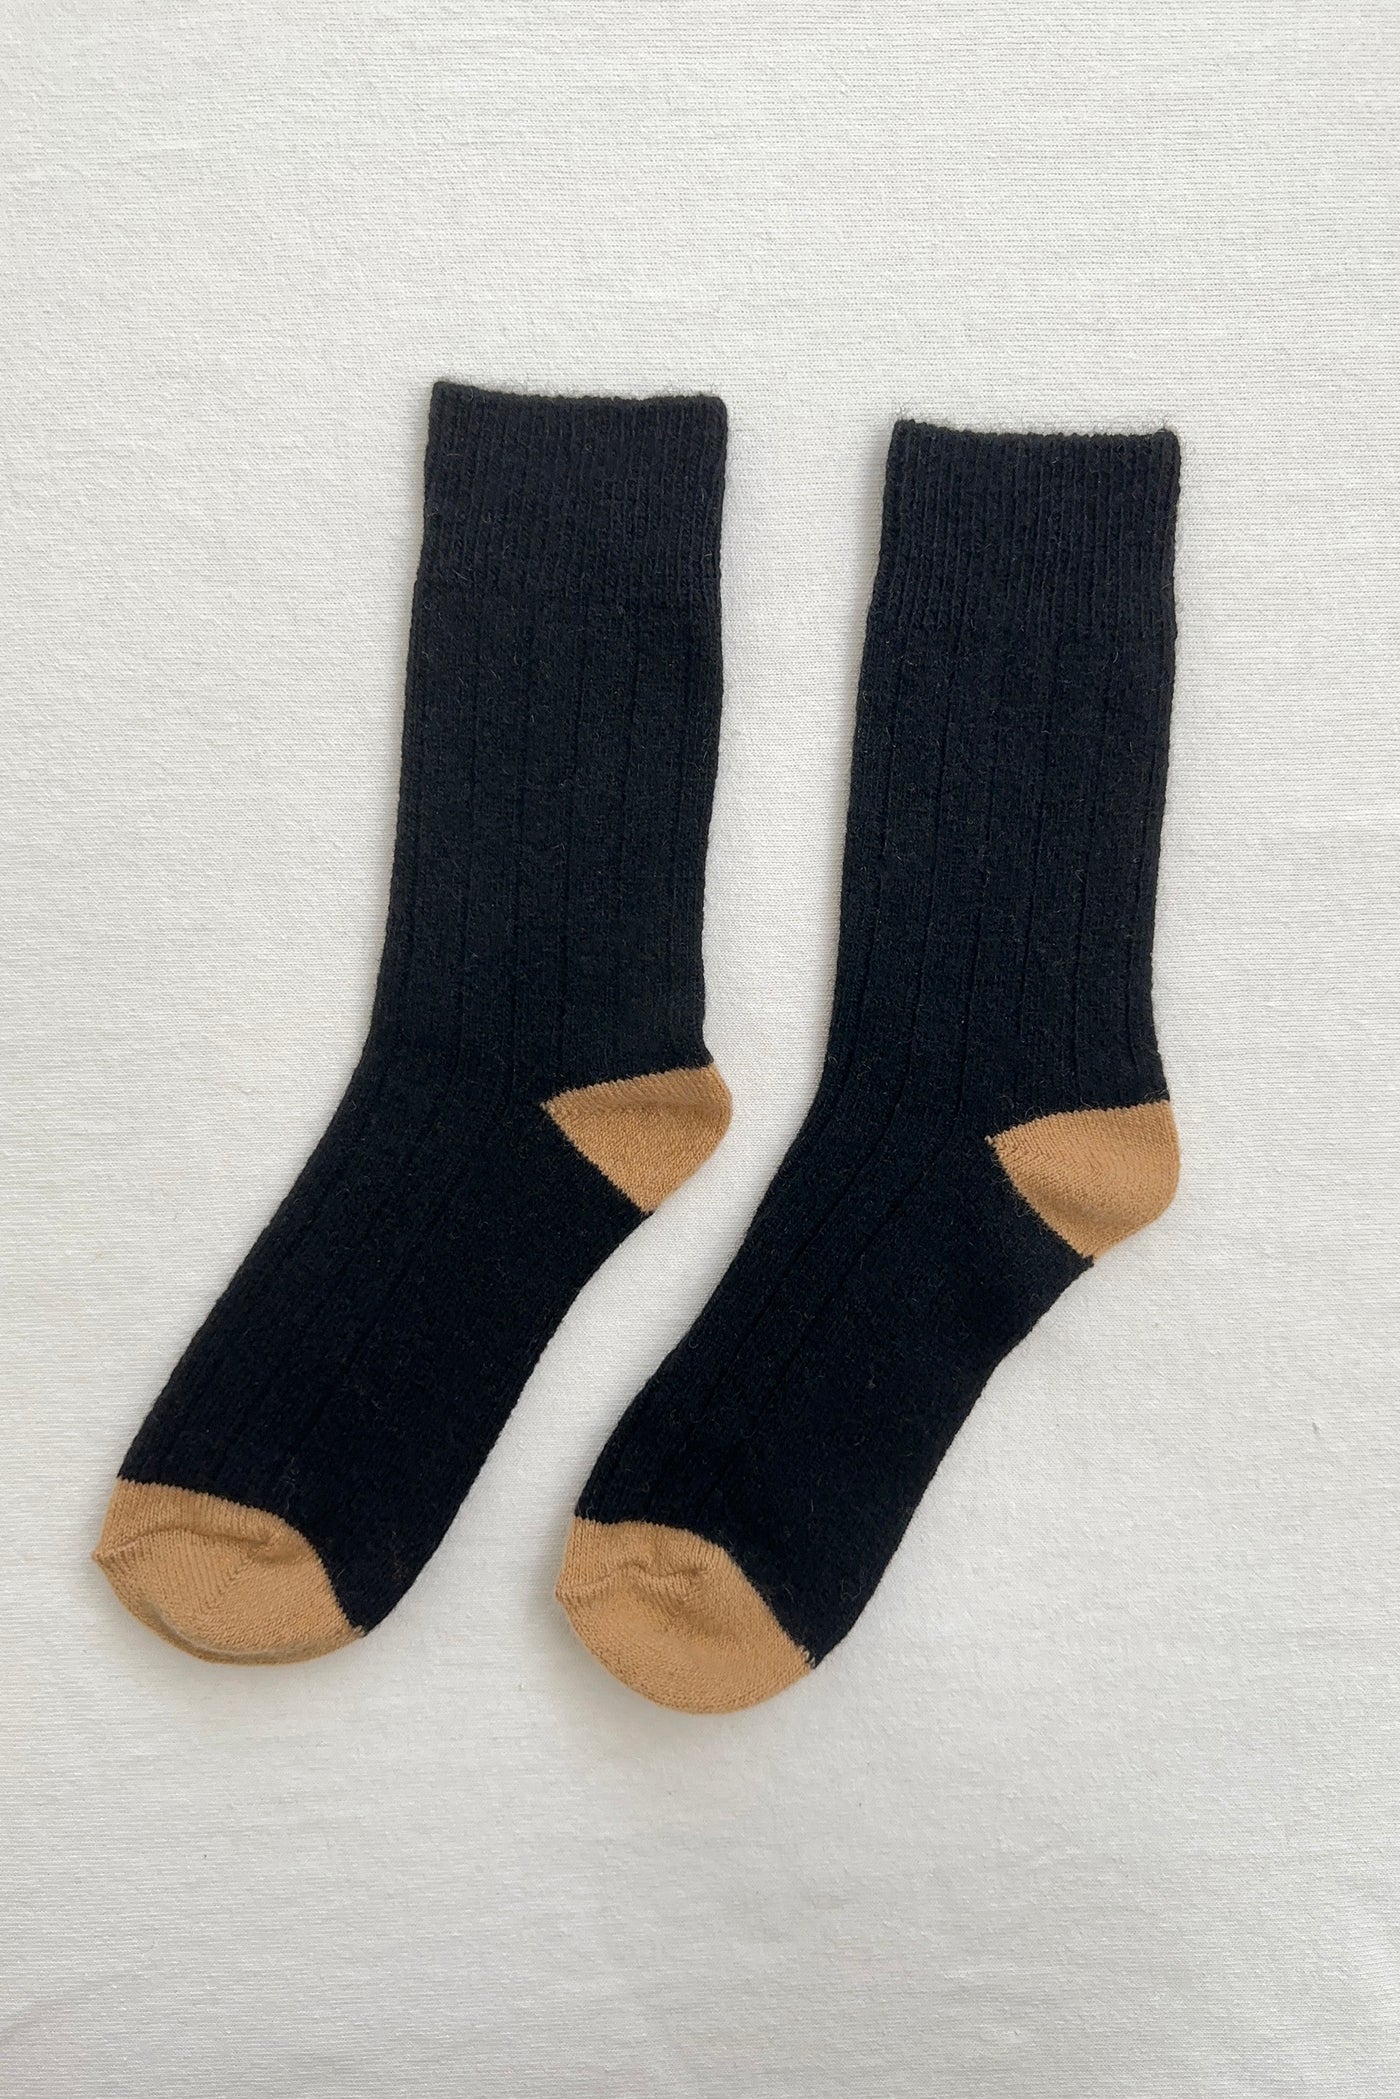 Le Bon Shoppe Classic Cashmere Sock in BLACK - OS